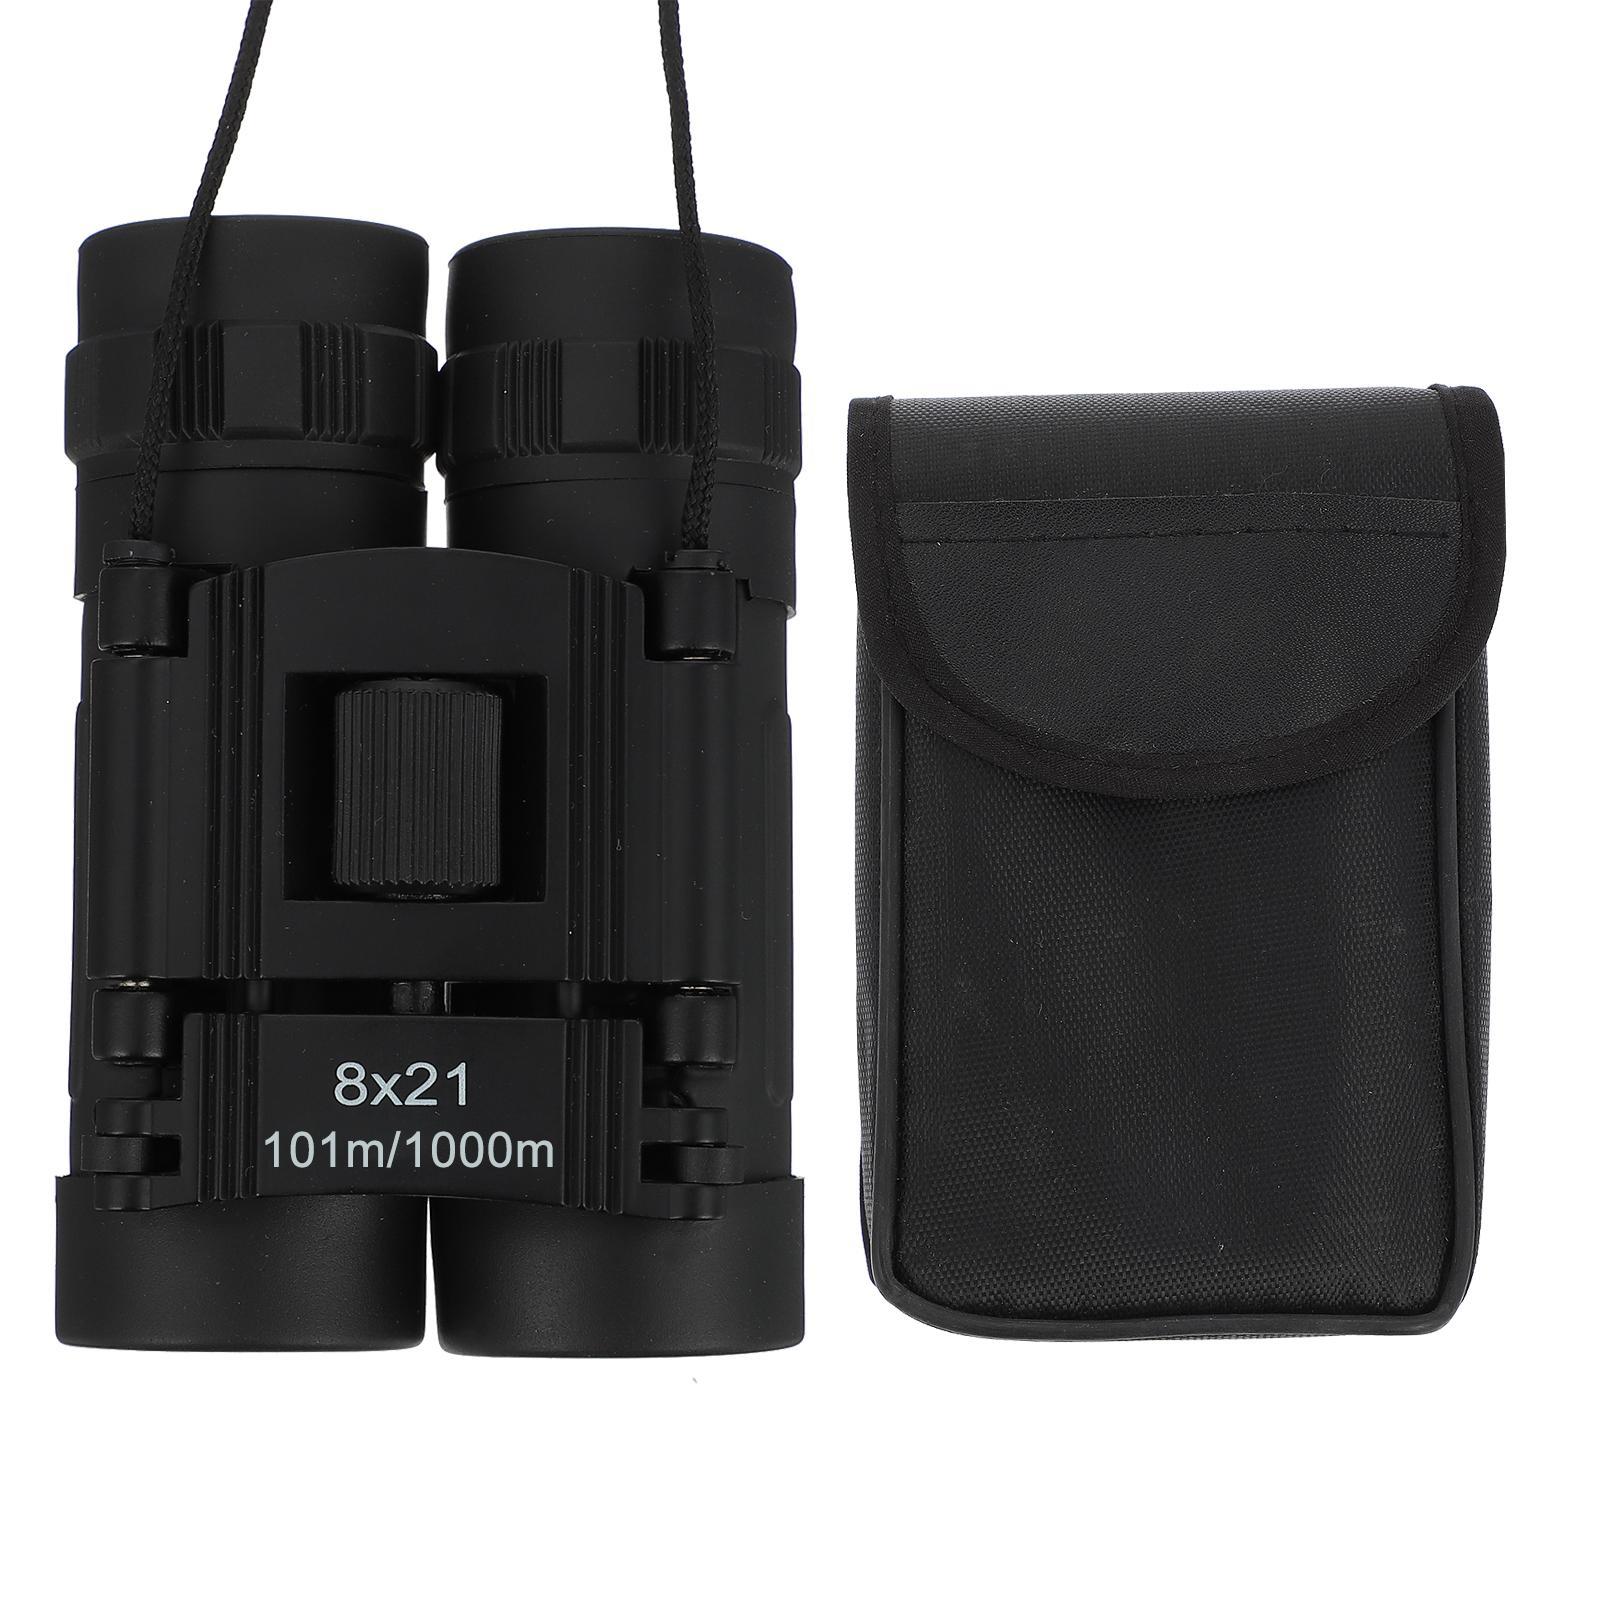 Low Light Night Vision Binocular Compact Multipurpose 8x21 Handheld Binocular